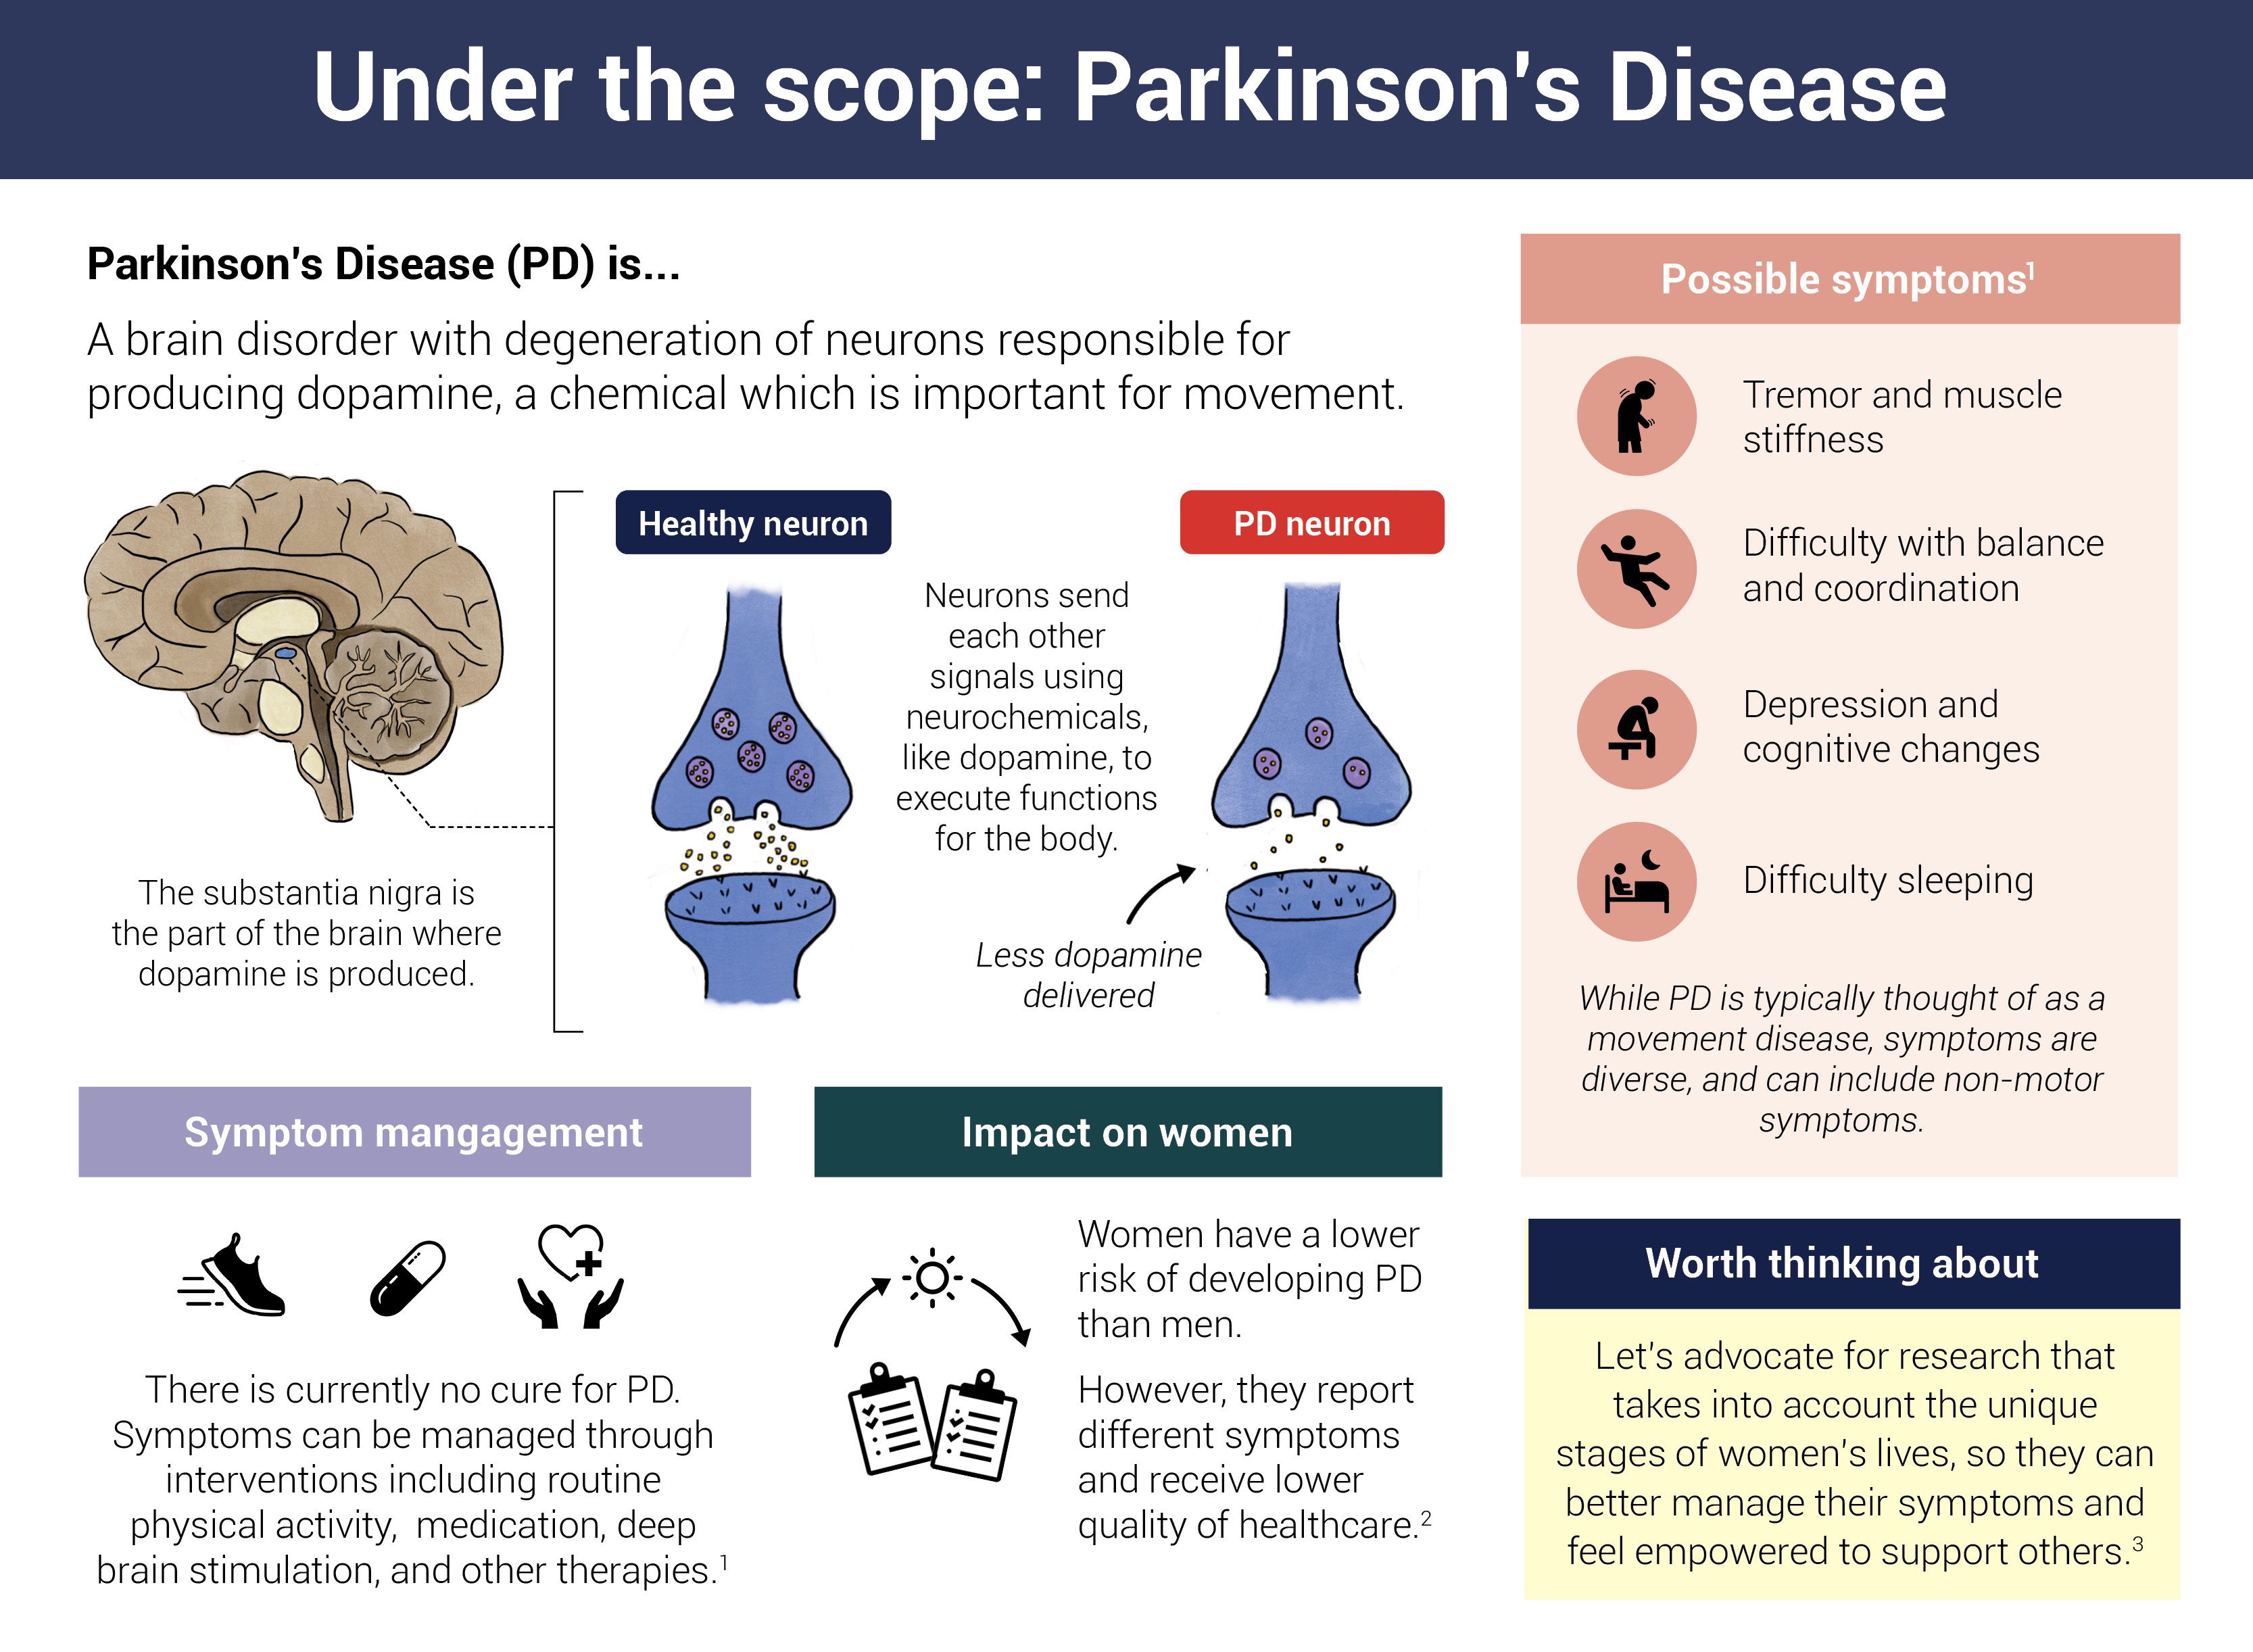 Infographic about Parkinson's disease